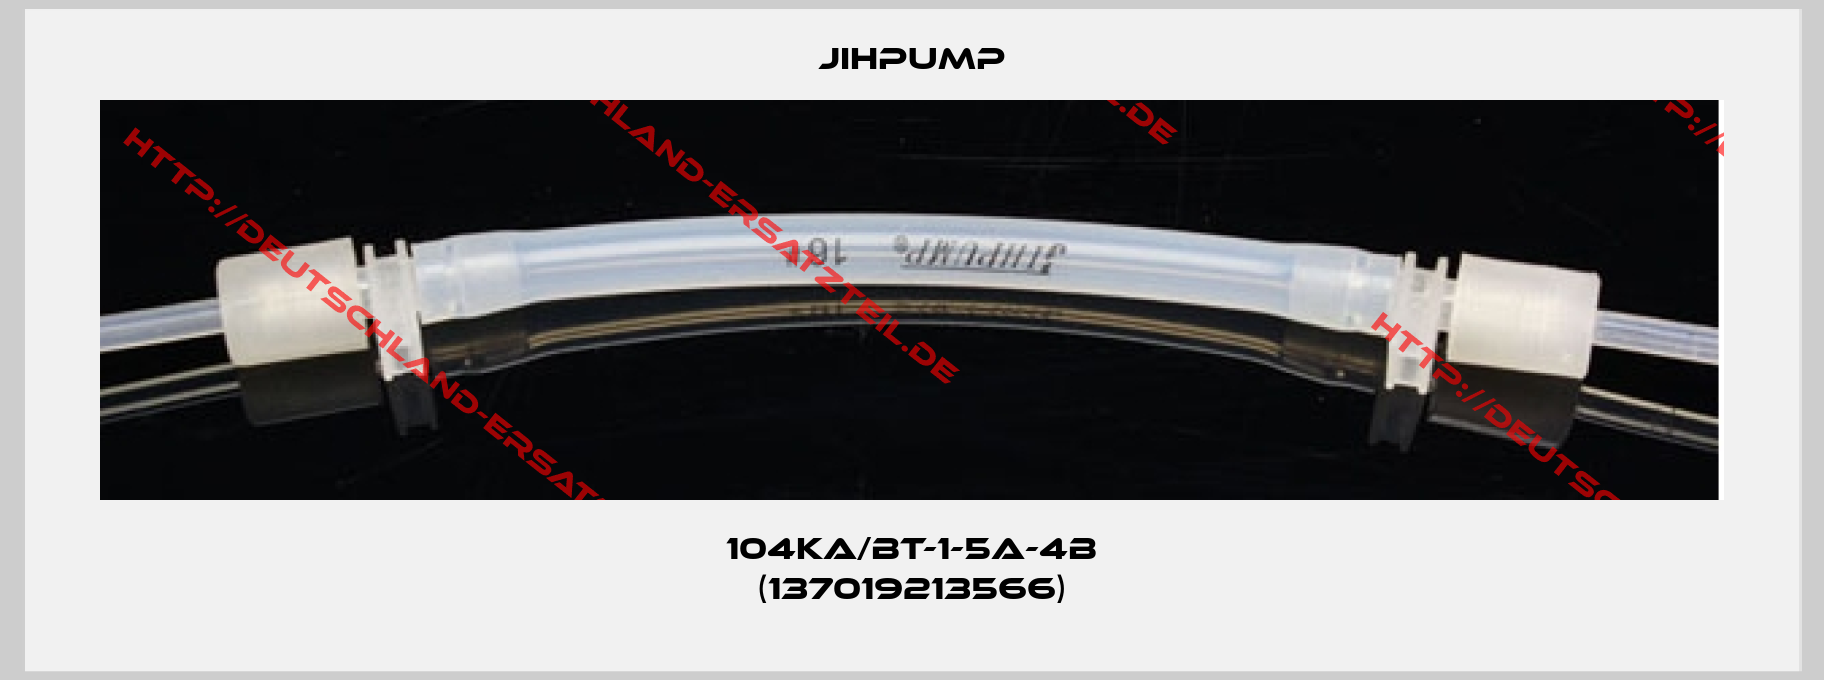 JIHPUMP-104KA/BT-1-5A-4B (137019213566)